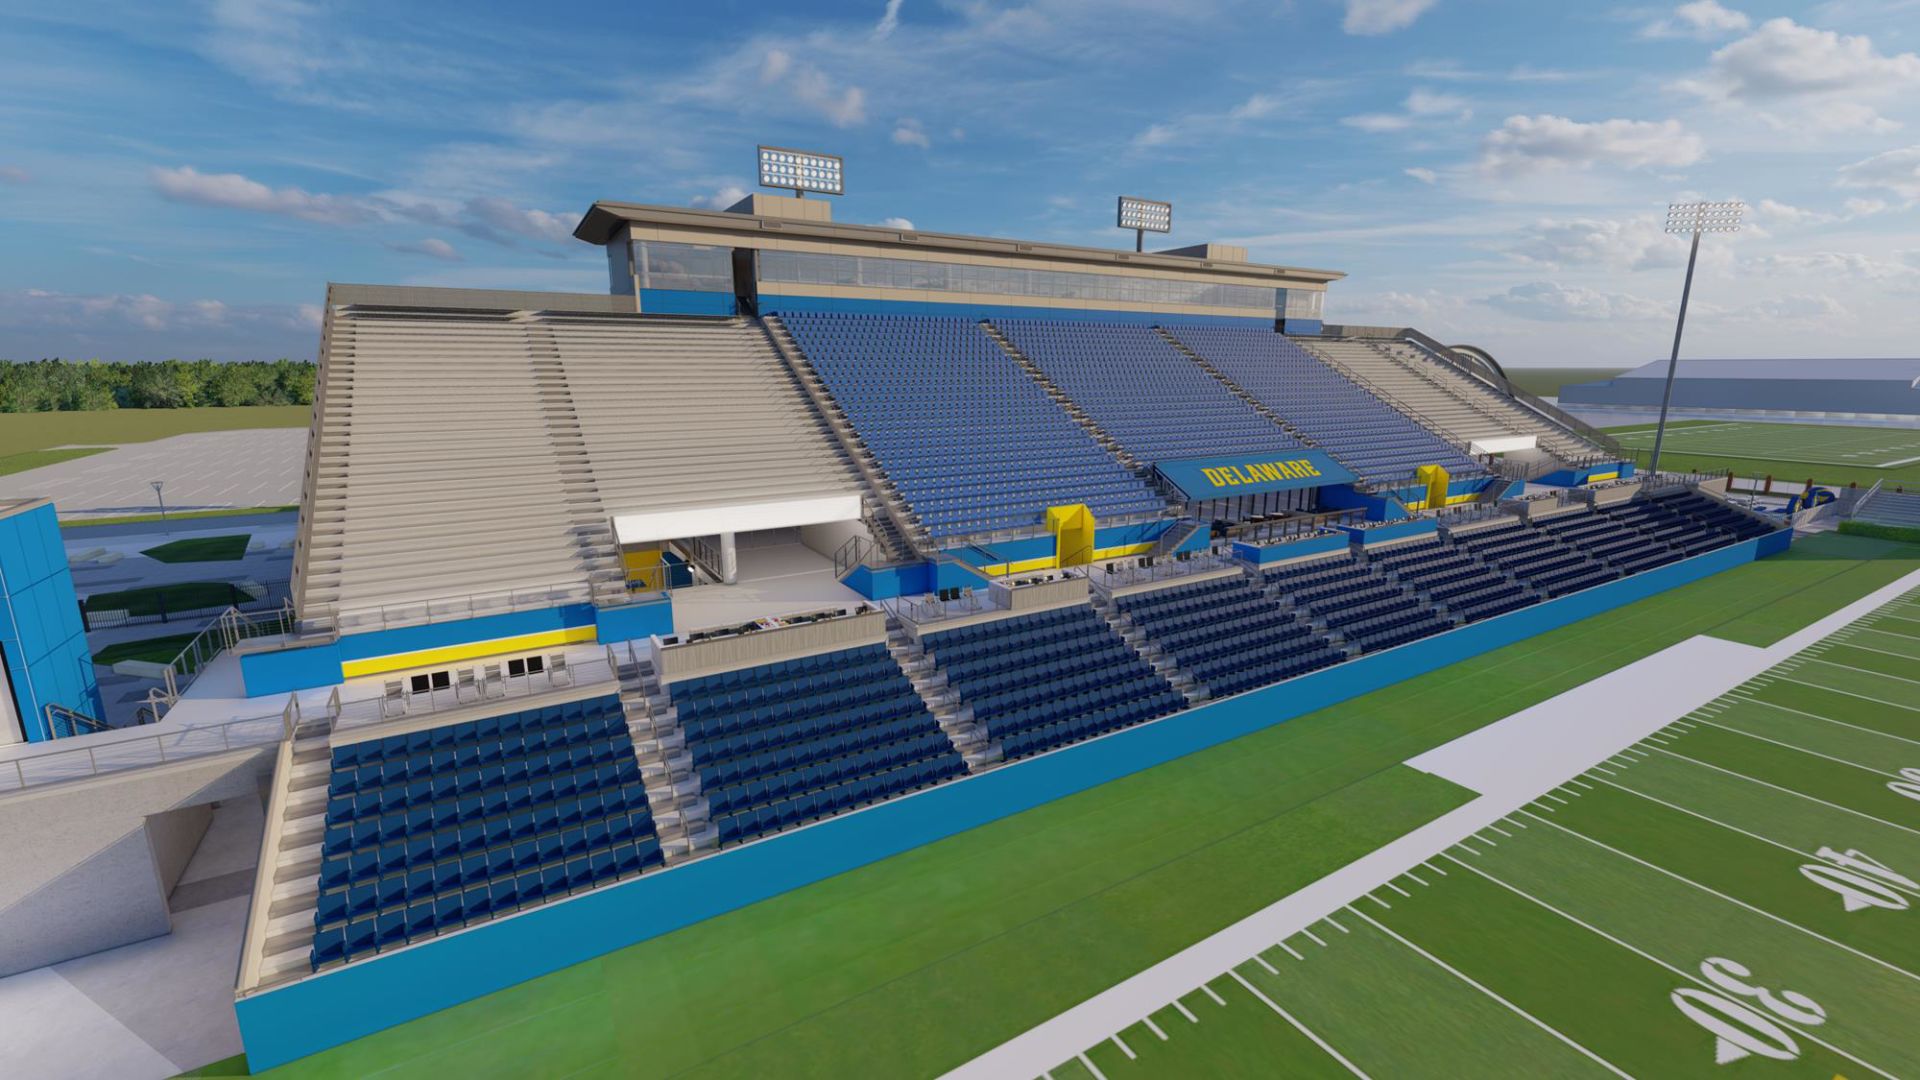 University Of Delaware Stadium Seating Chart